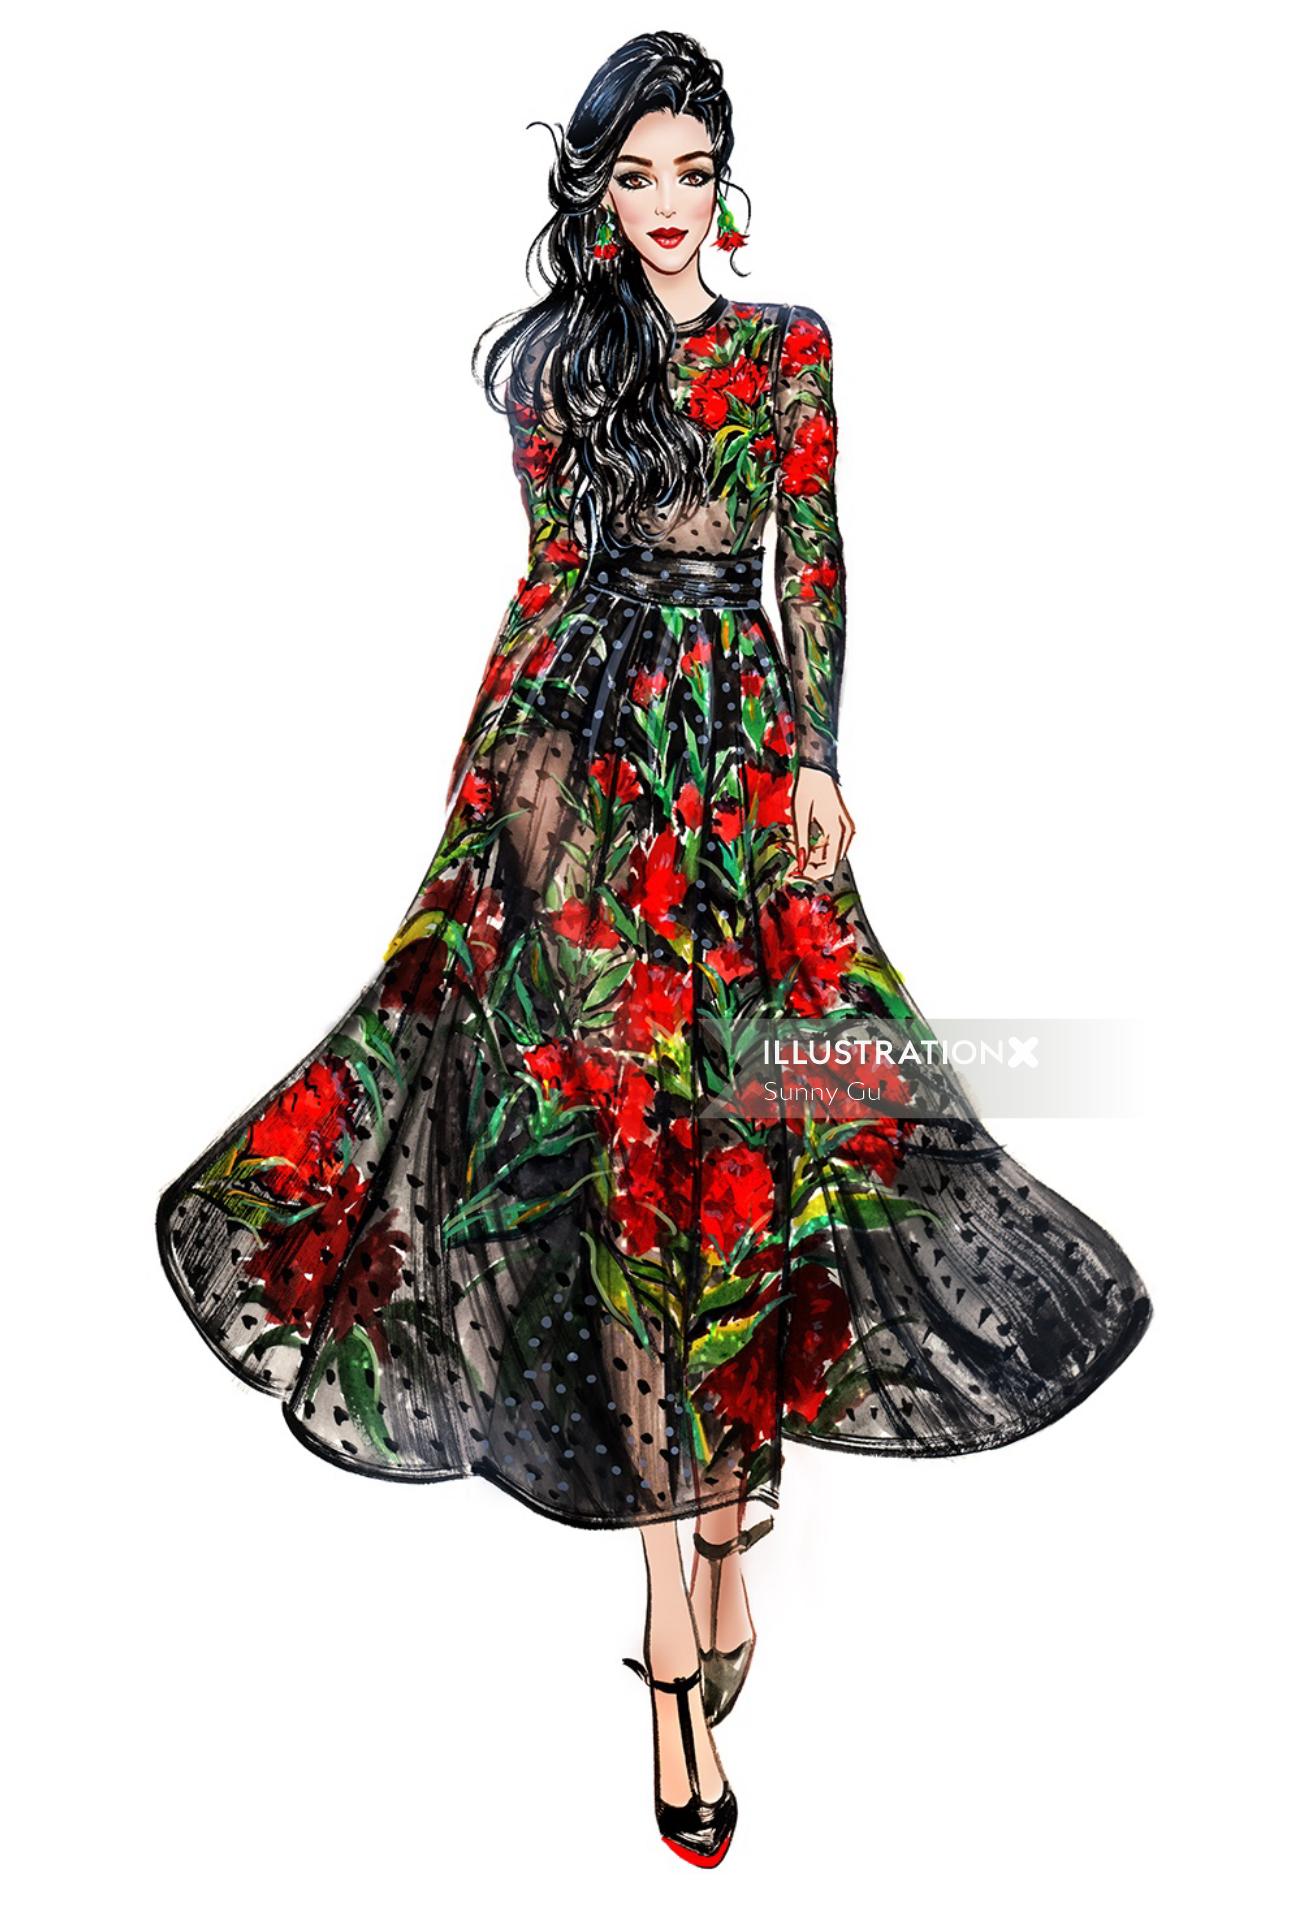 Fashion Girl in black floral dress